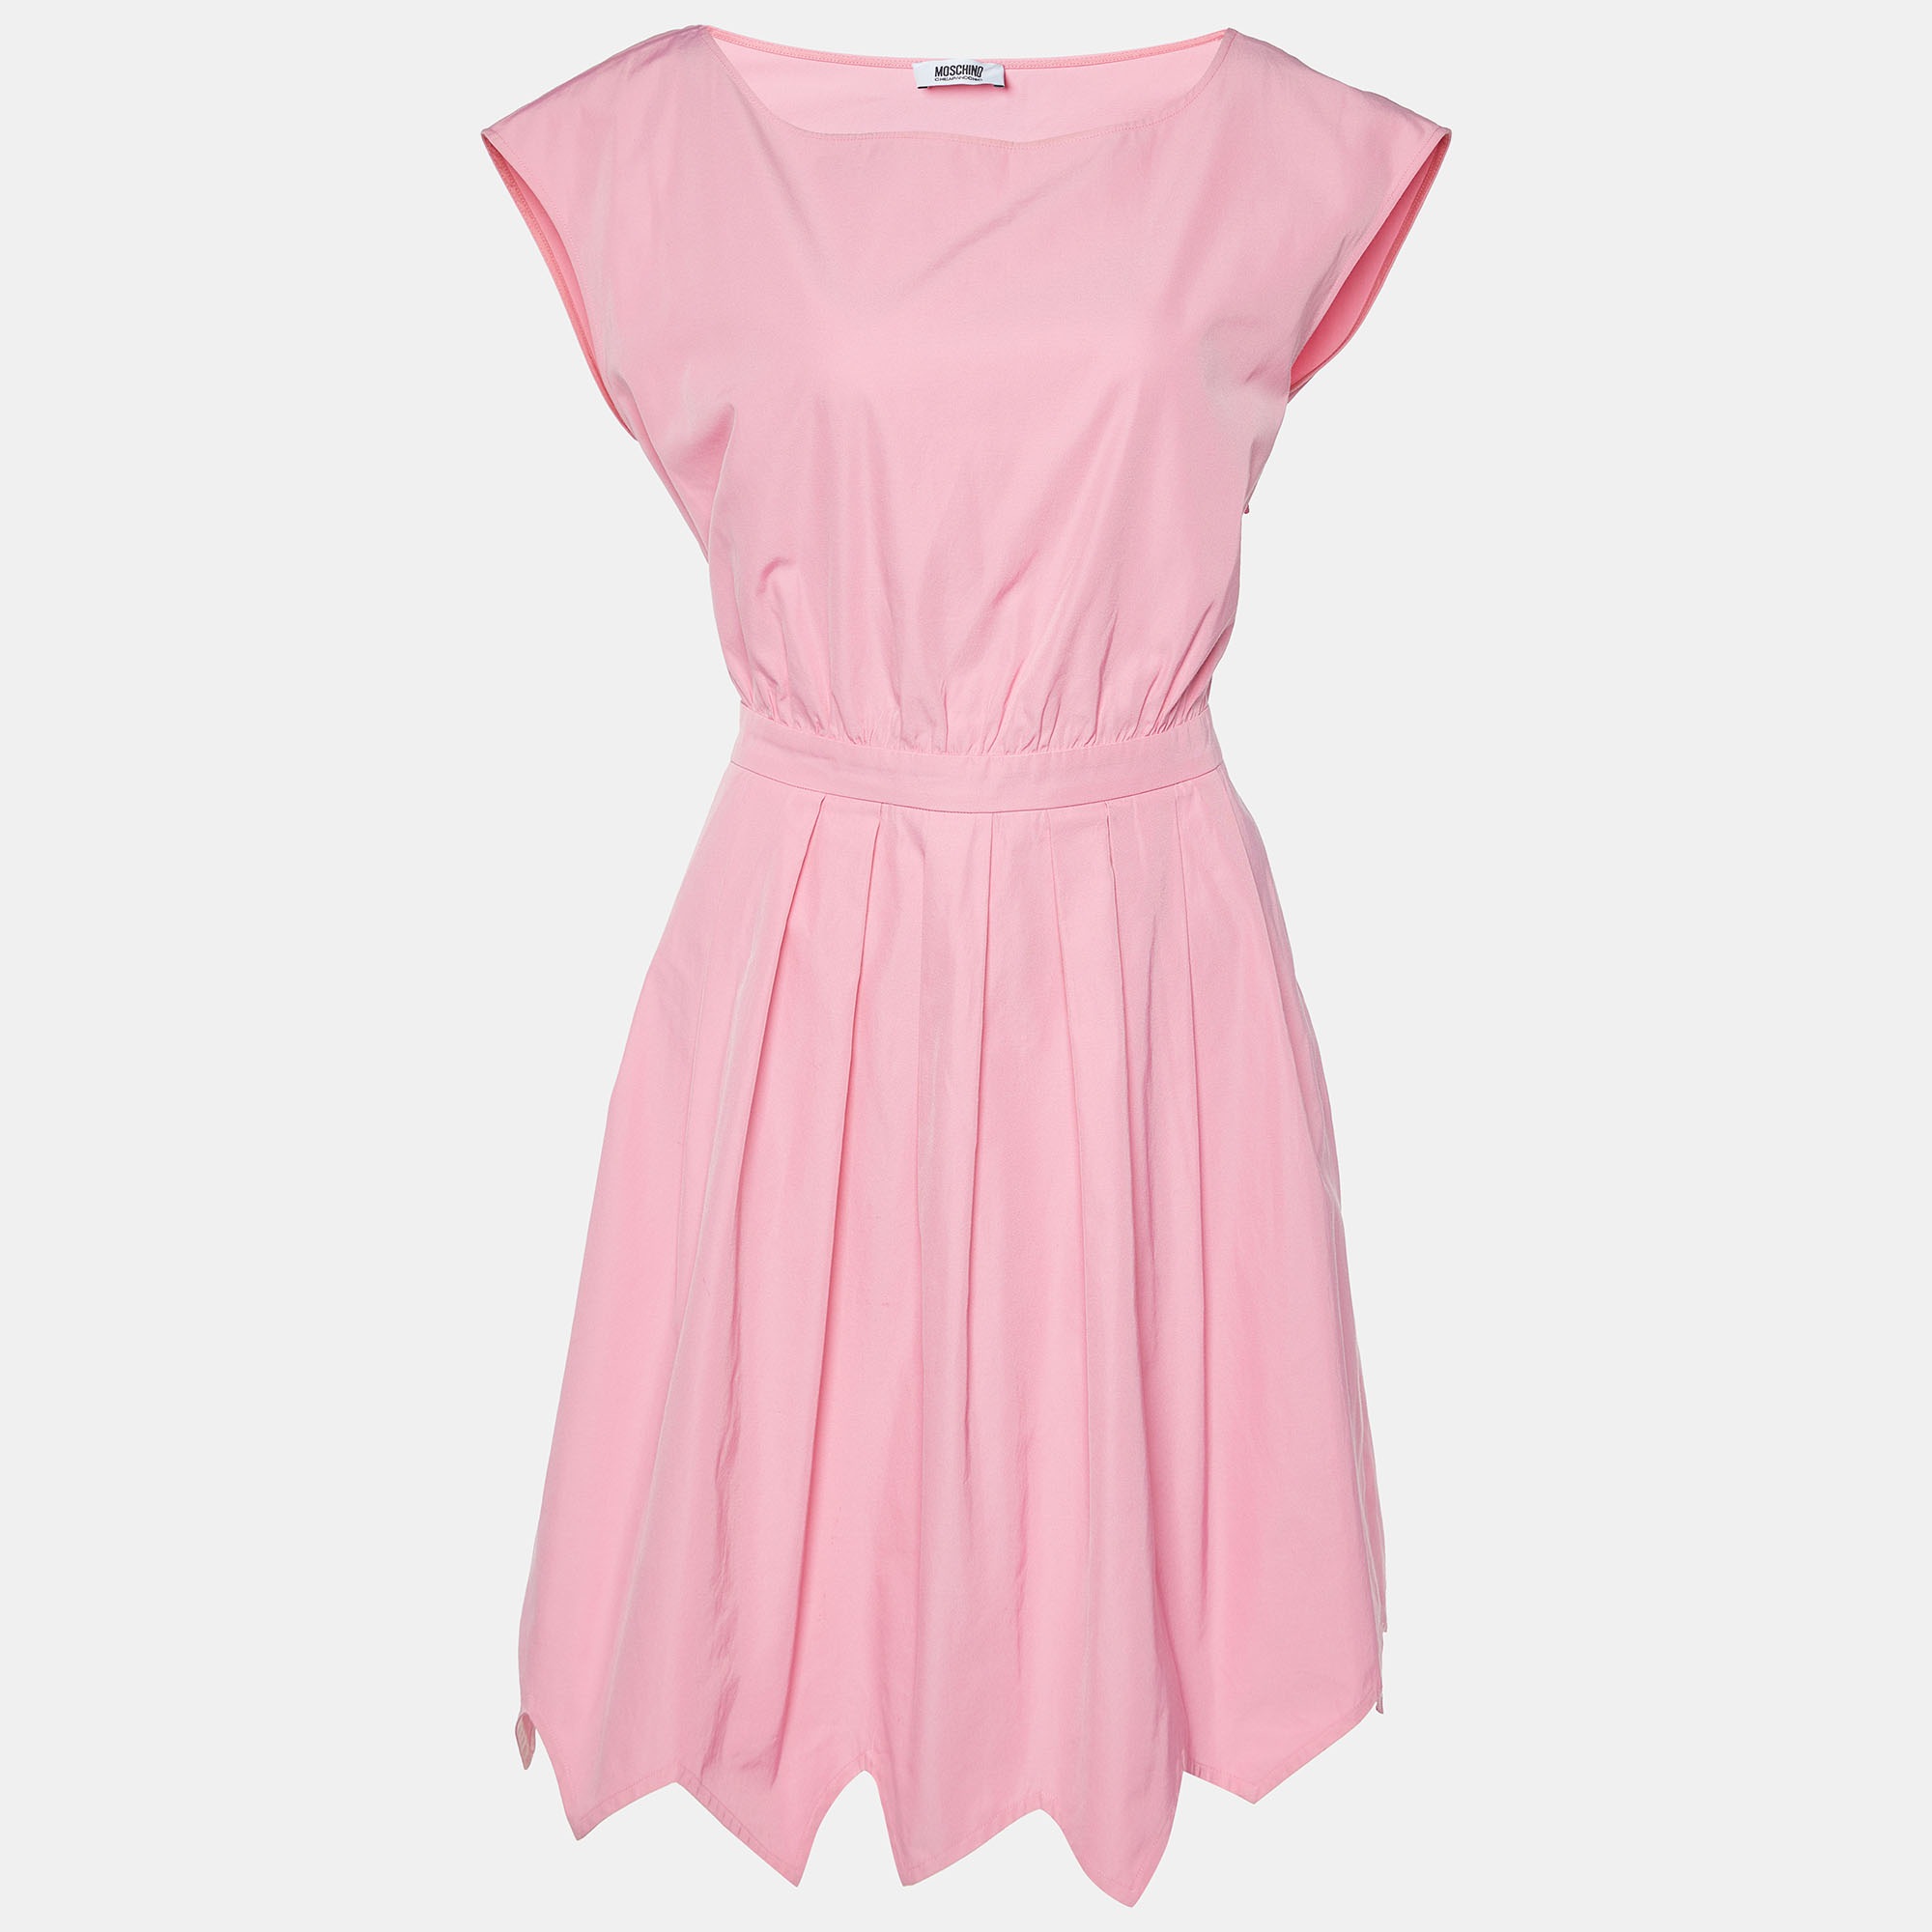 Moschino Cheap And Chic Pink Cotton Blend Sleeveless Dress M